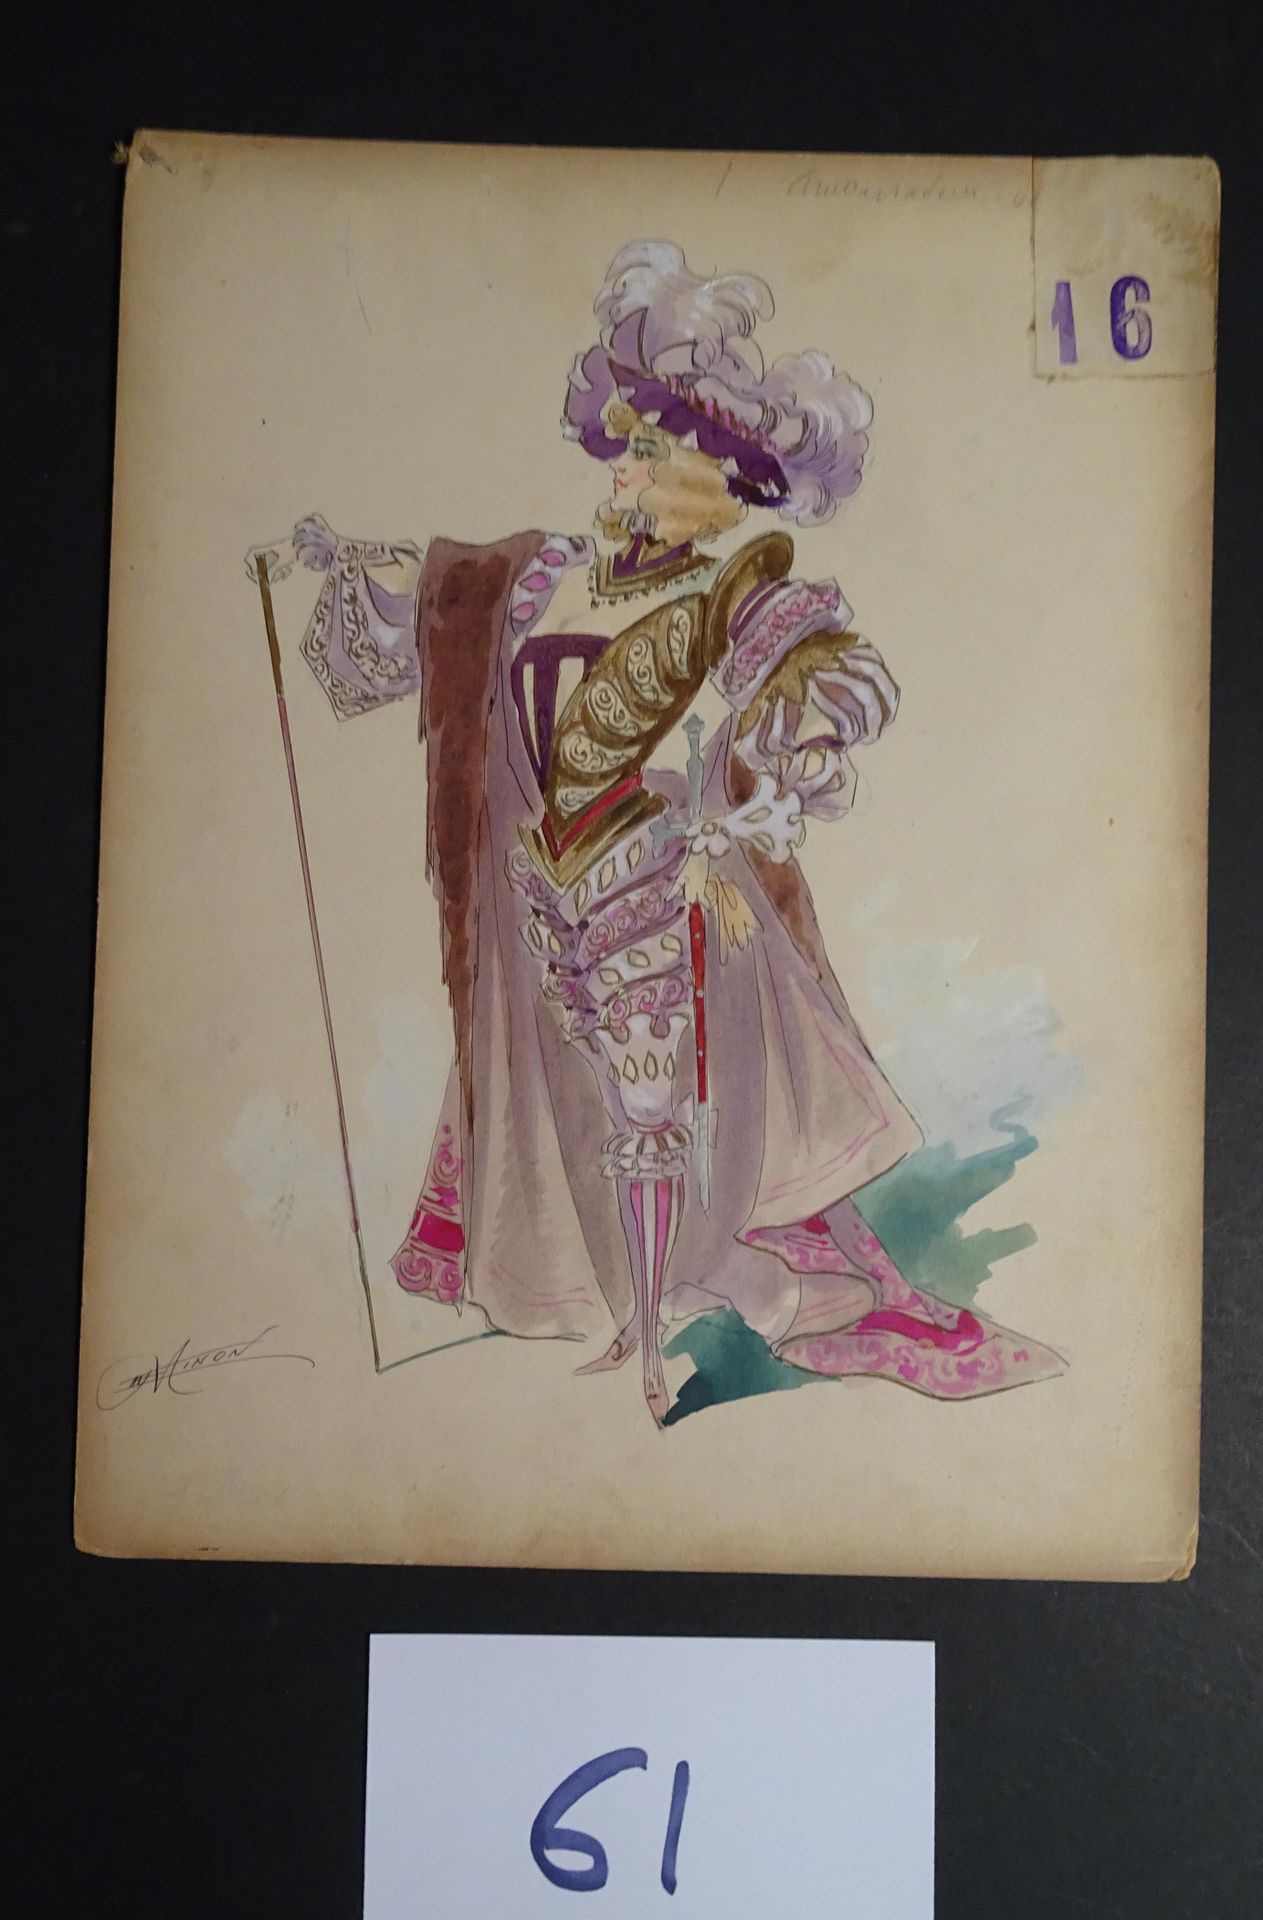 MINON 铭恩公司

"大使"，约1880年。为一本杂志制作的服装模型。水彩水粉，印度墨水，已签名。32 x 25厘米。